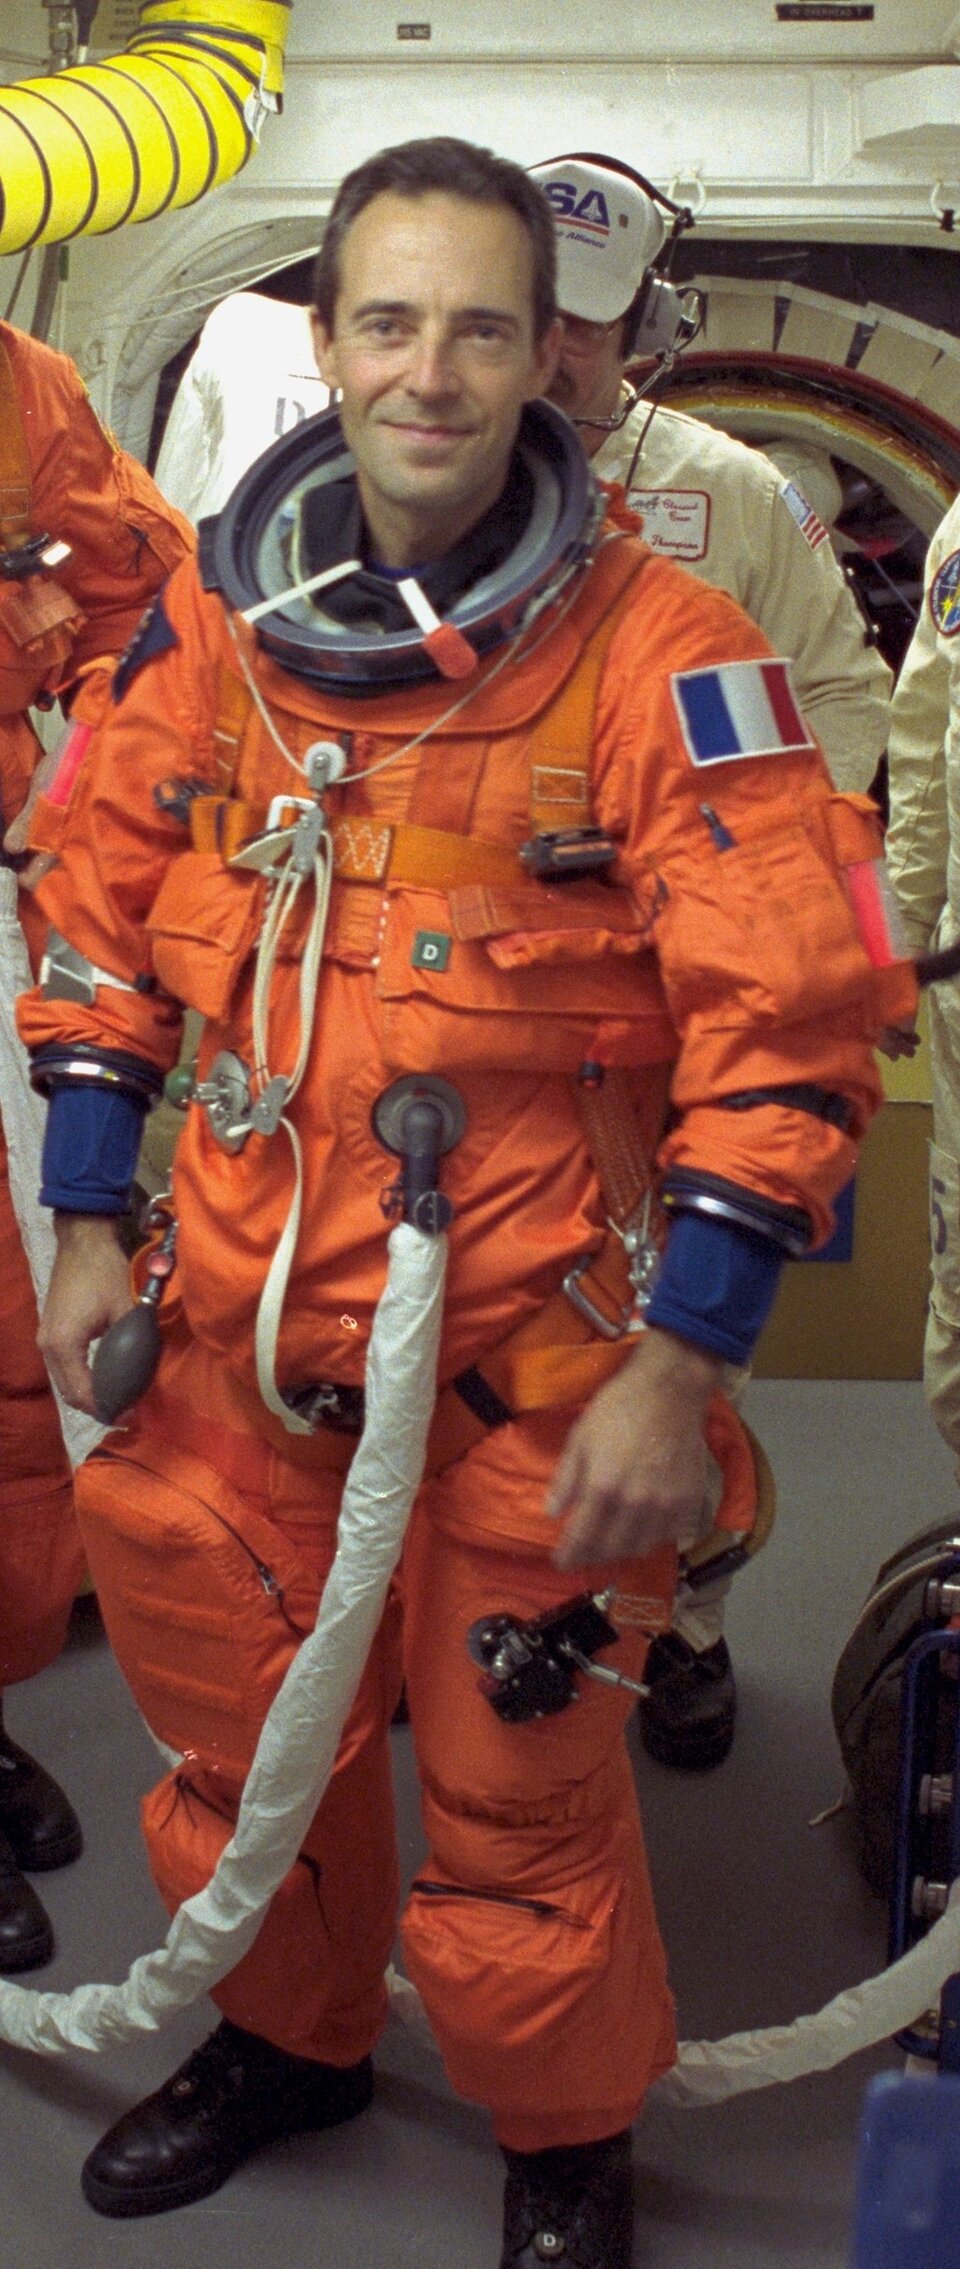 Jean- François Clervoy